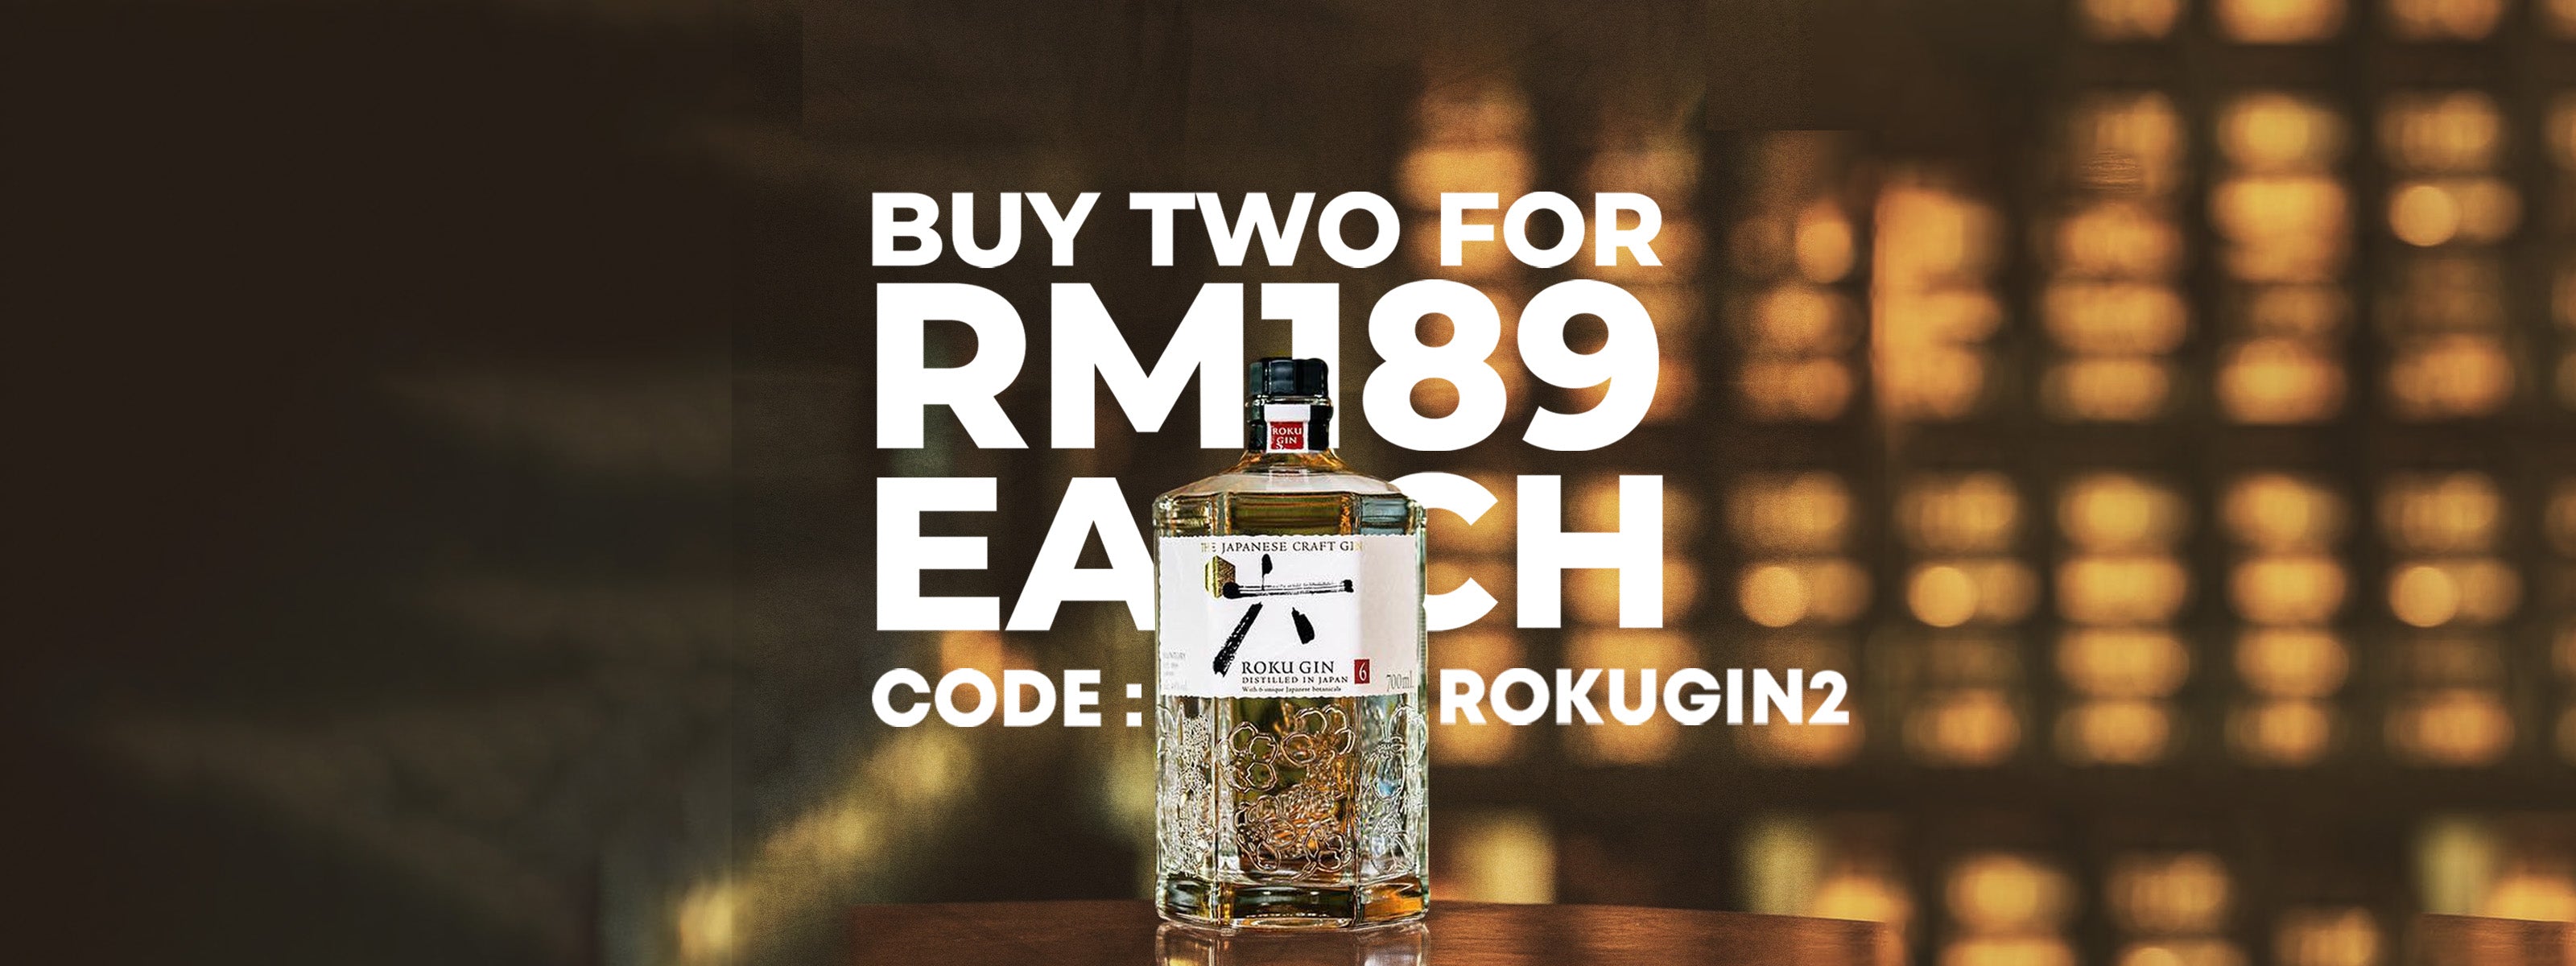 Grab 2 bottles of Roku Gin for RM189 each